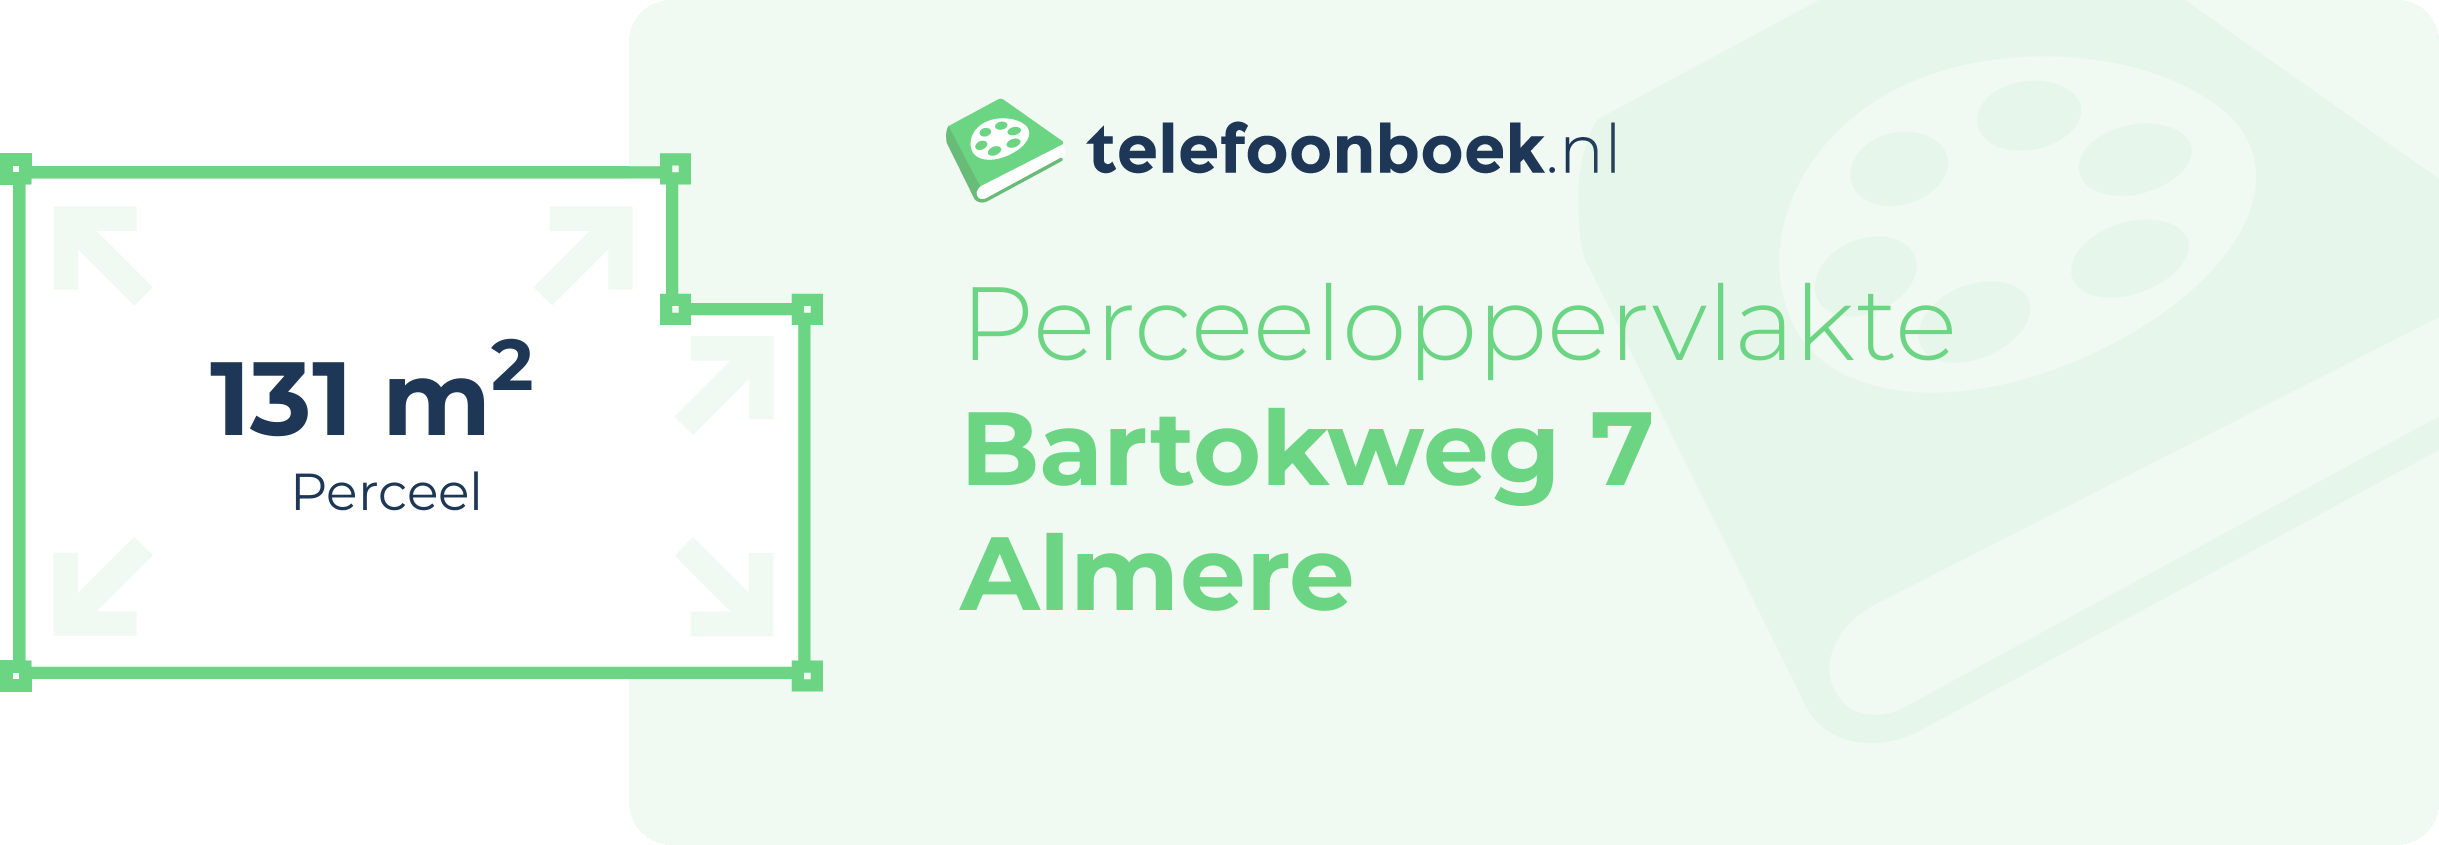 Perceeloppervlakte Bartokweg 7 Almere